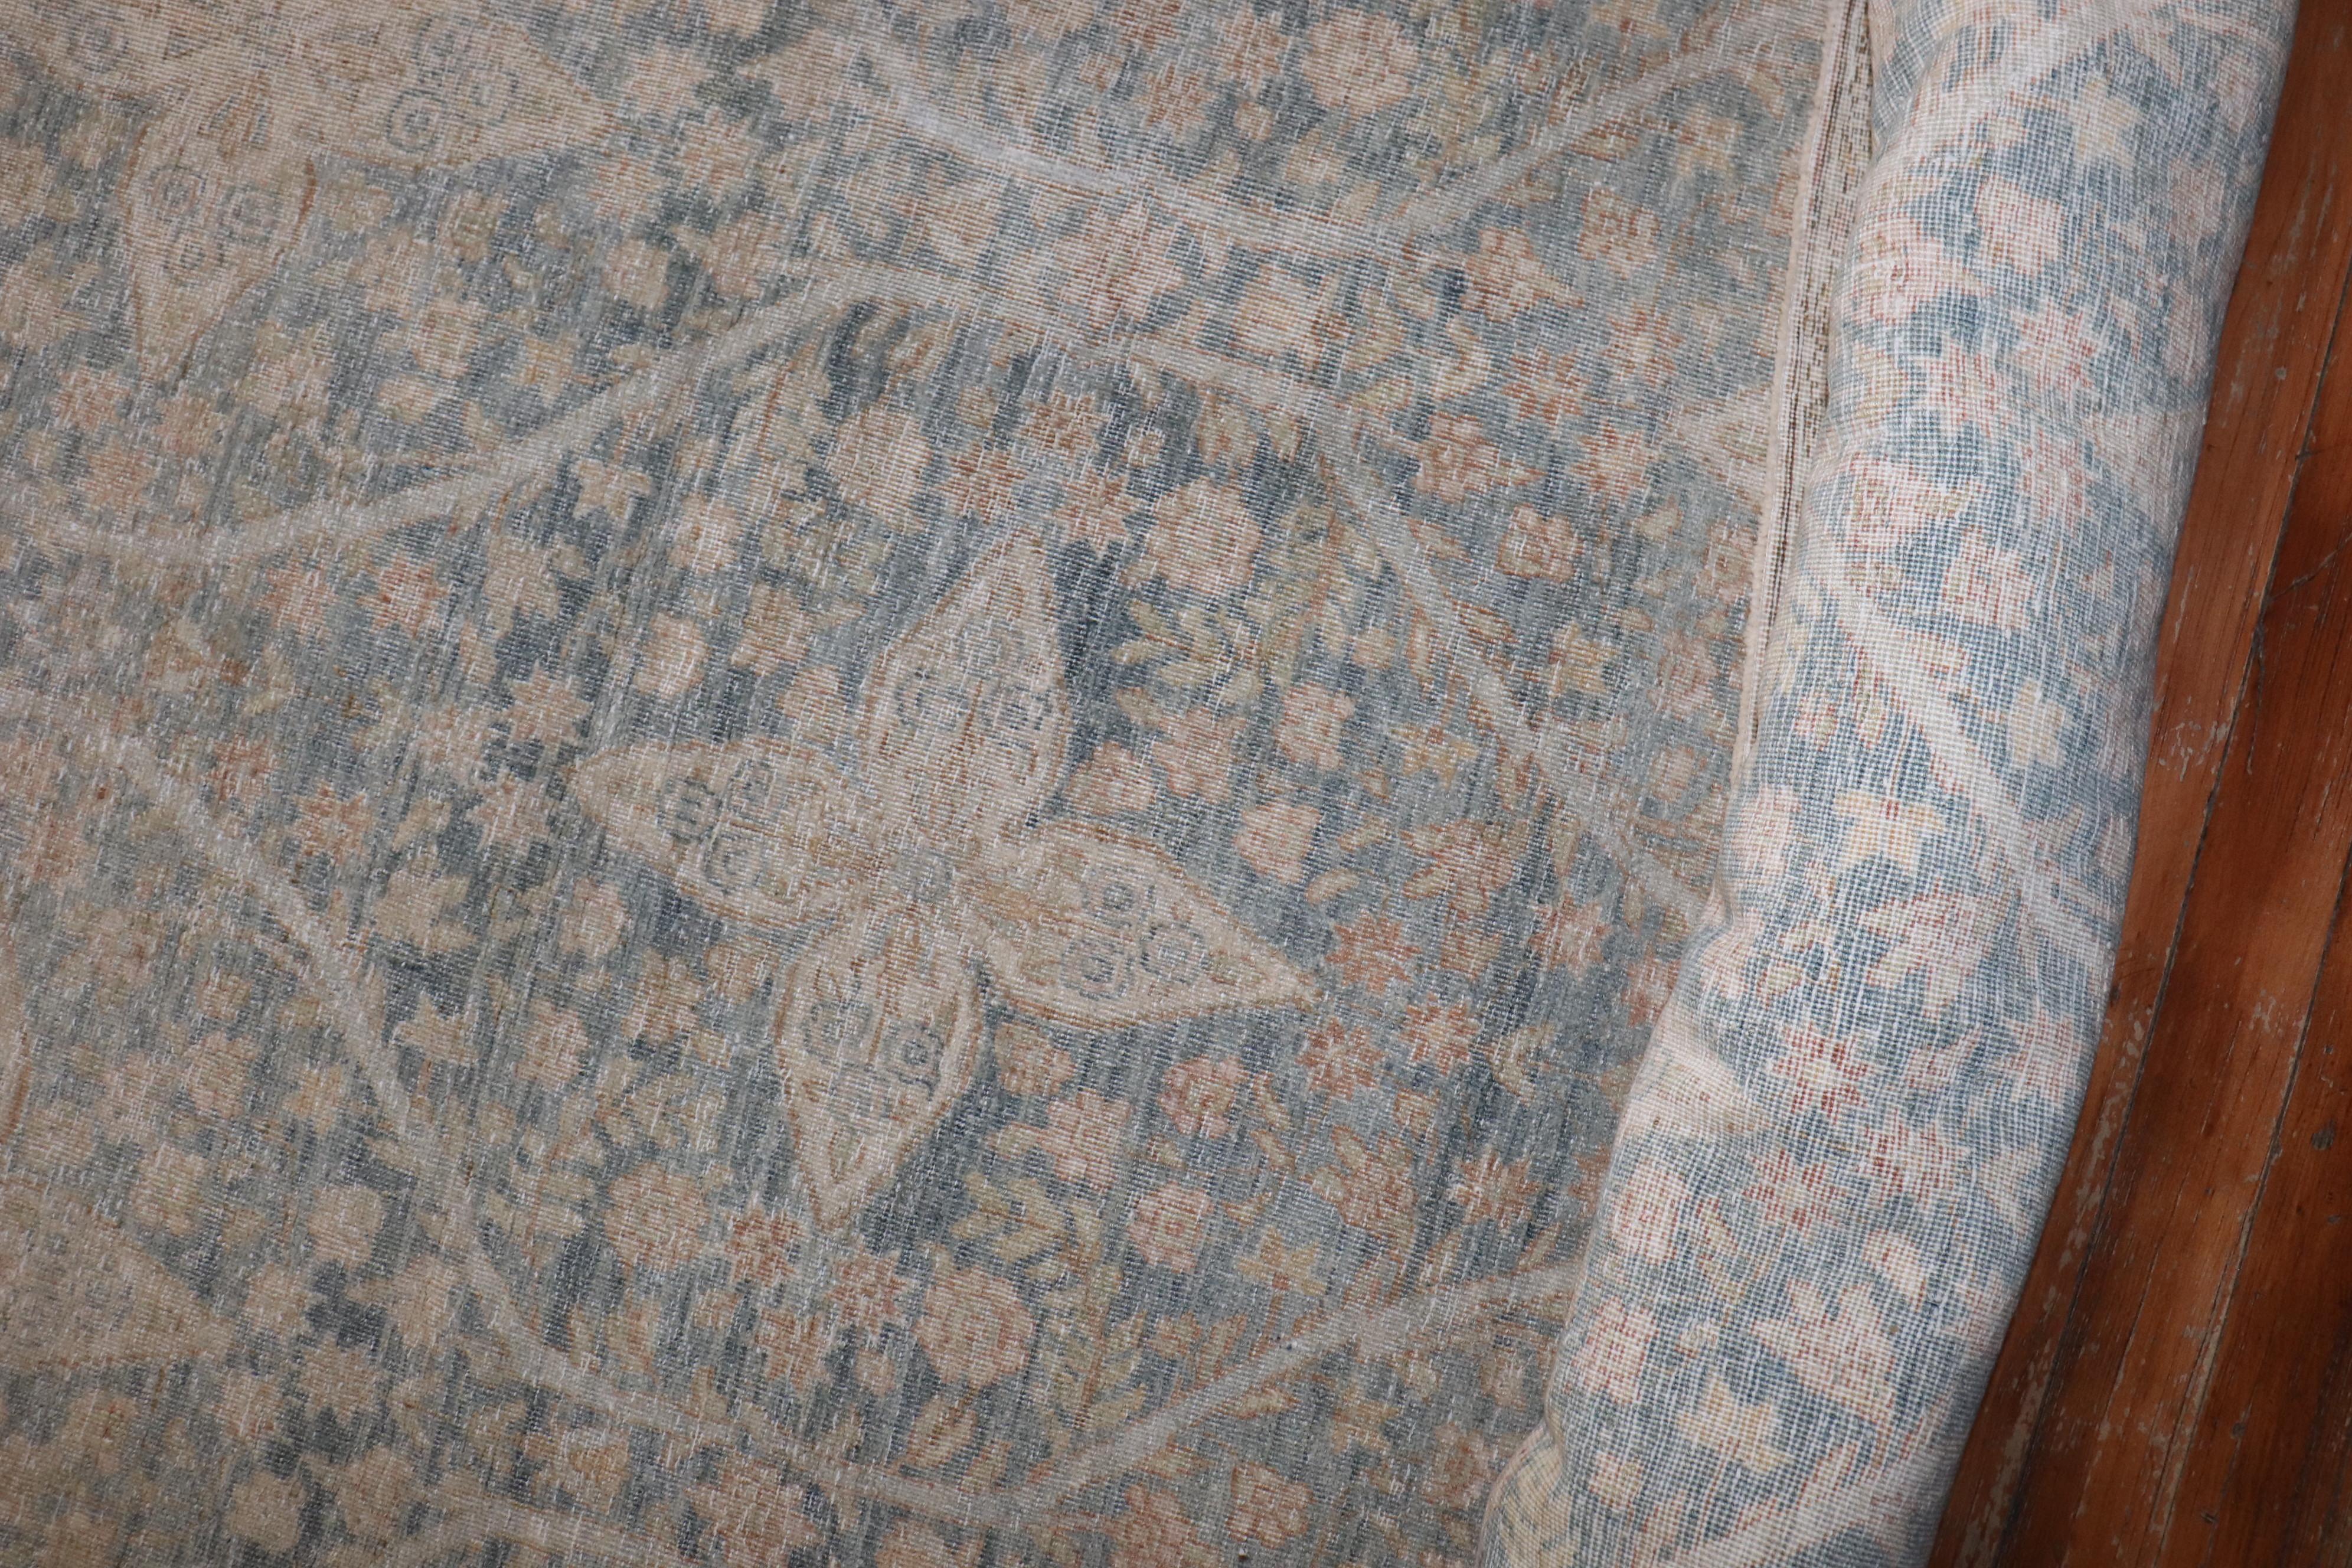 Zabihi Collection Exquisite Oversize Antique Persian Kerman Carpet  For Sale 4